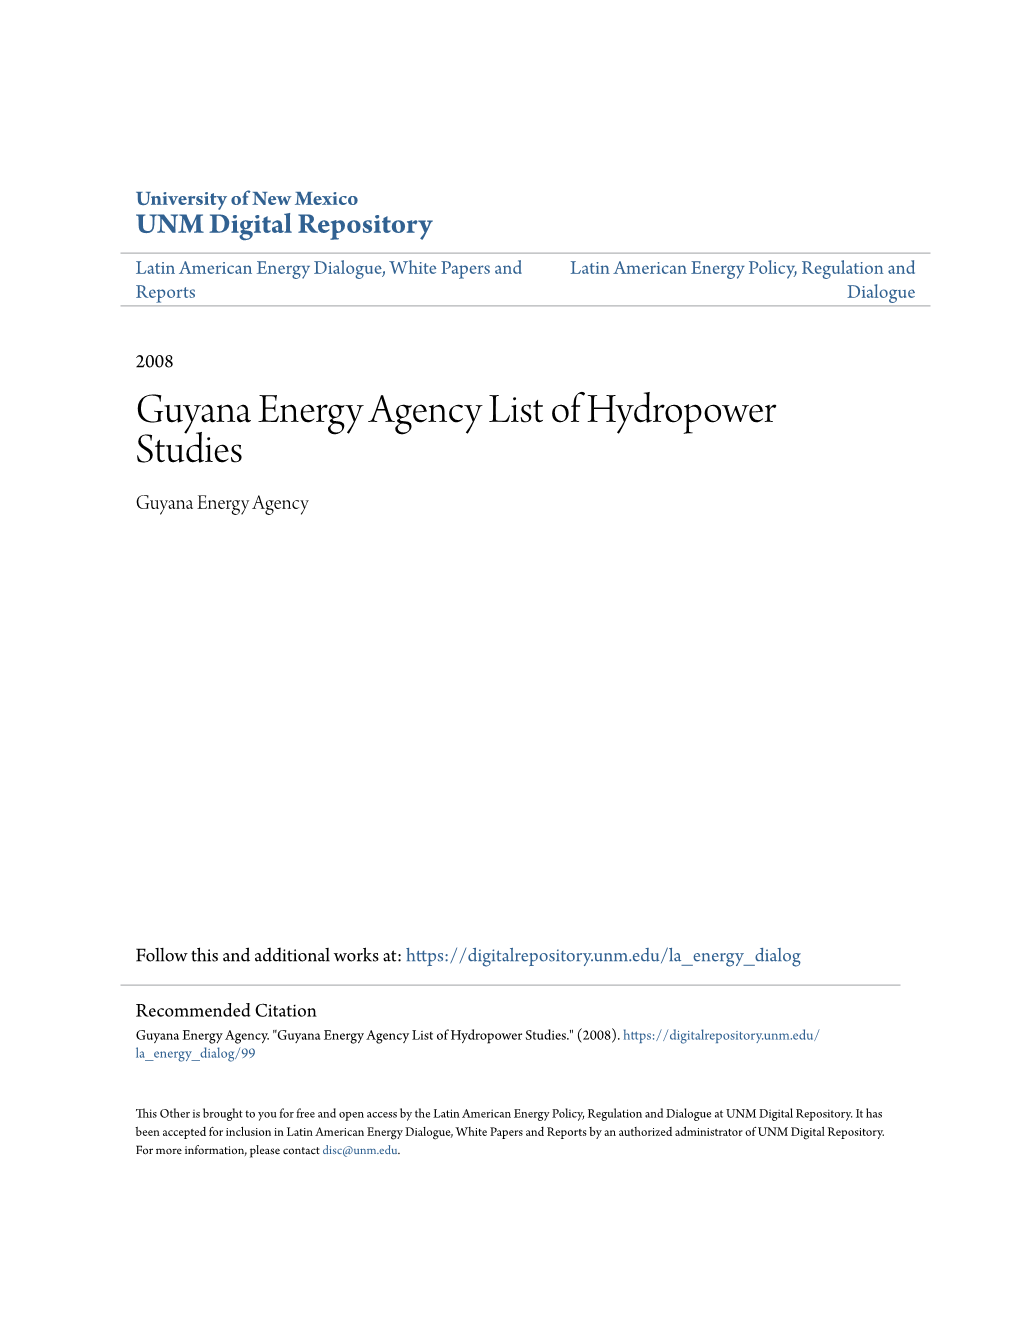 Guyana Energy Agency List of Hydropower Studies Guyana Energy Agency